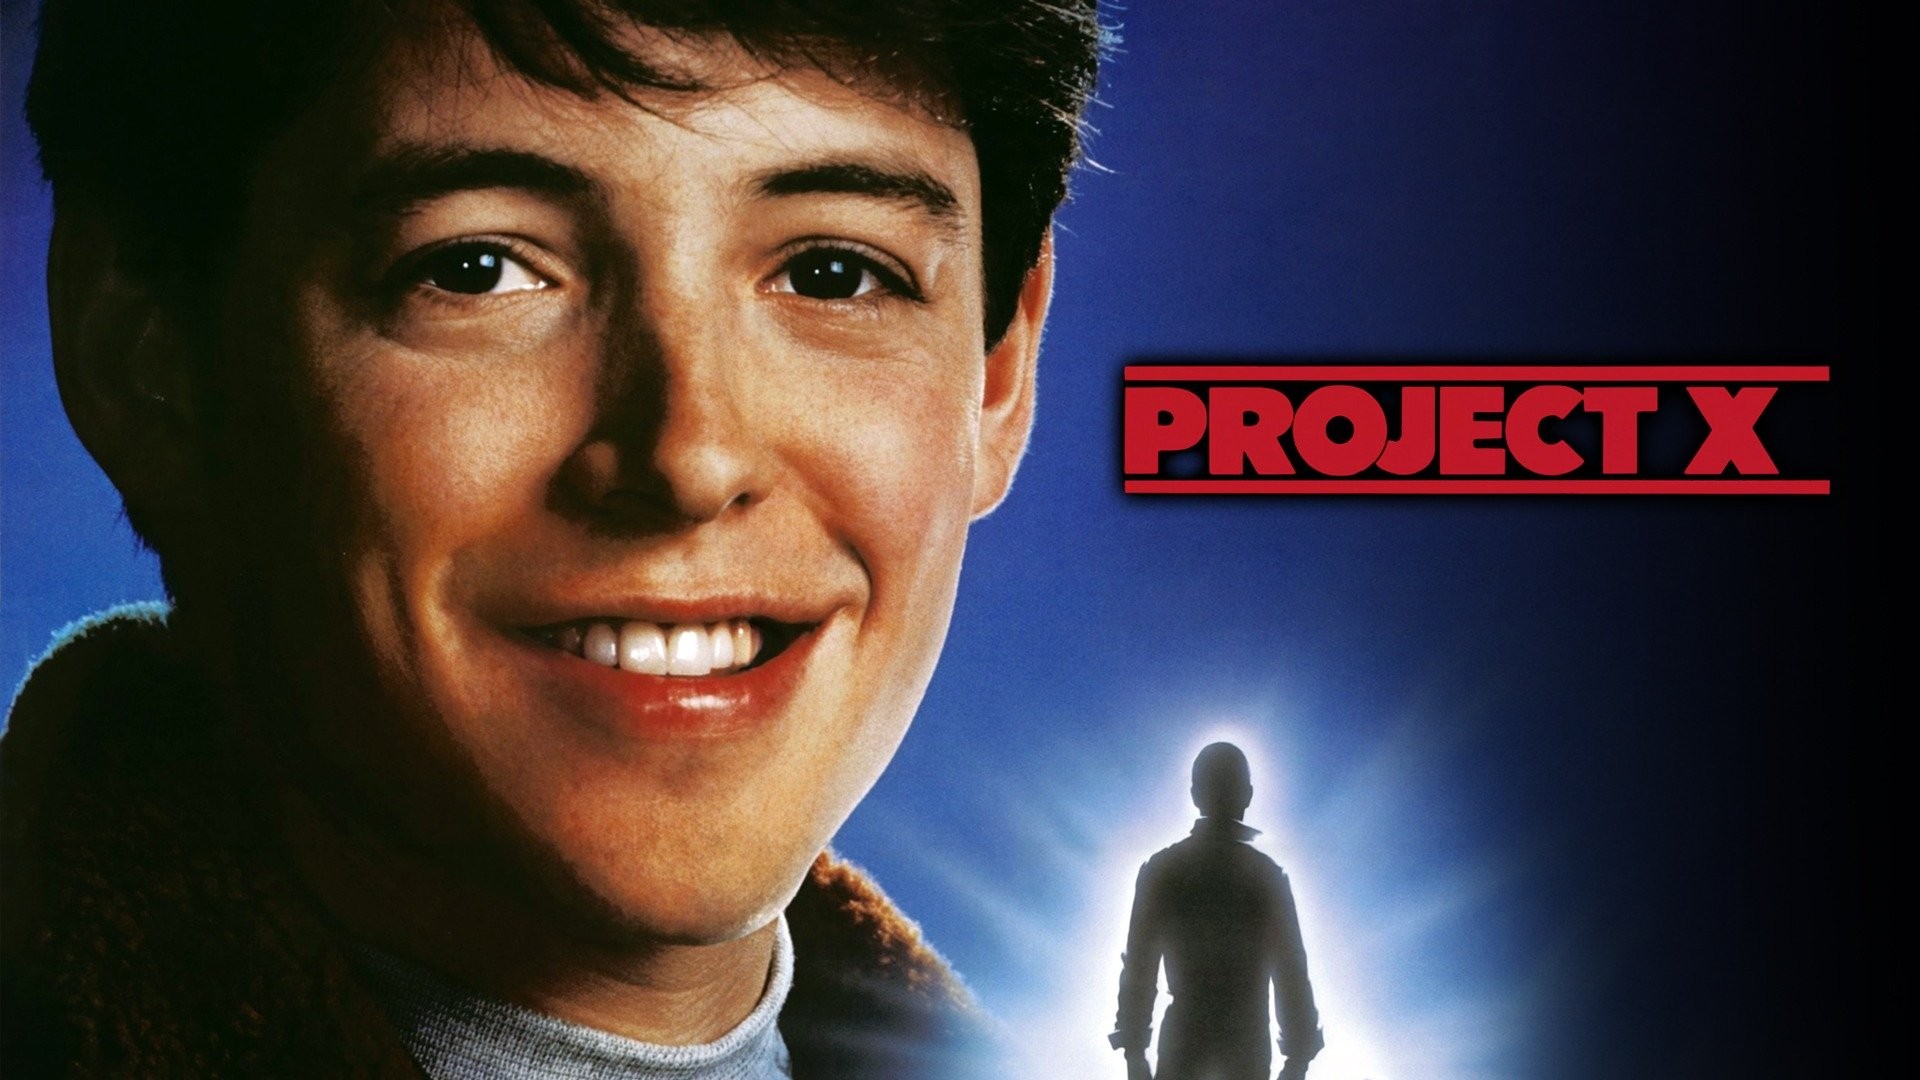 Project X (1987) - IMDb